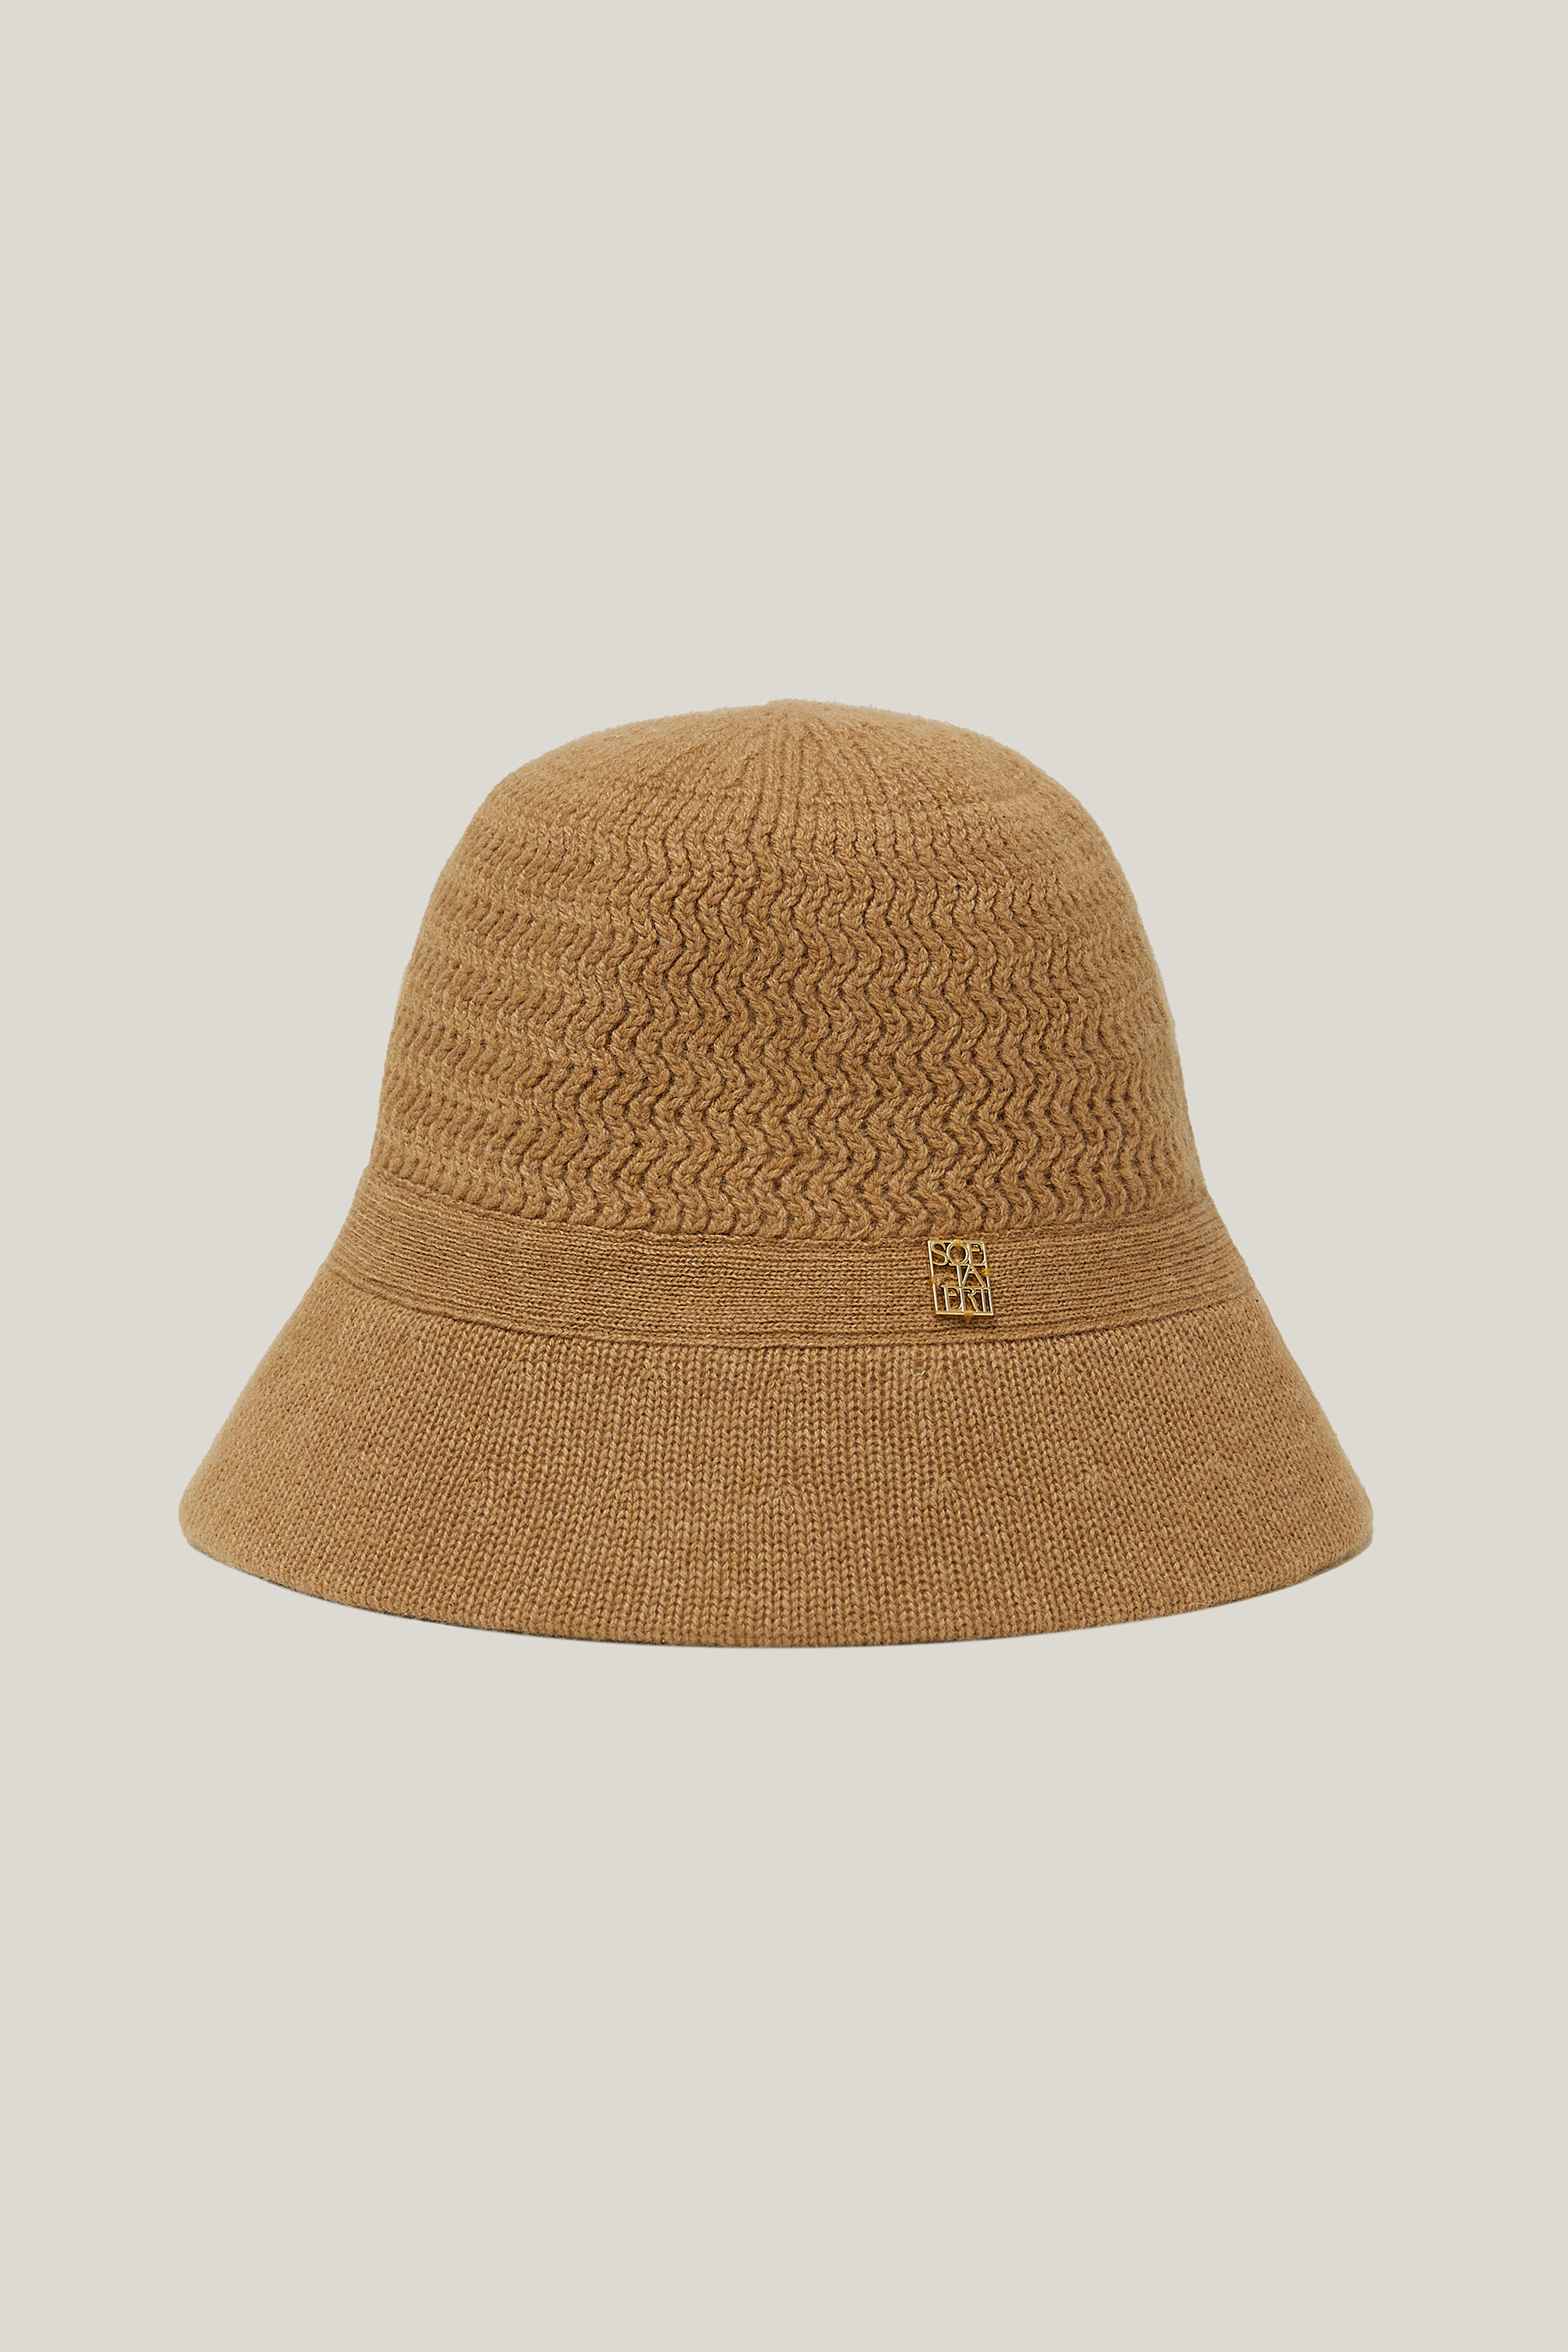 Adele Bucket Hat (Bright Camel)